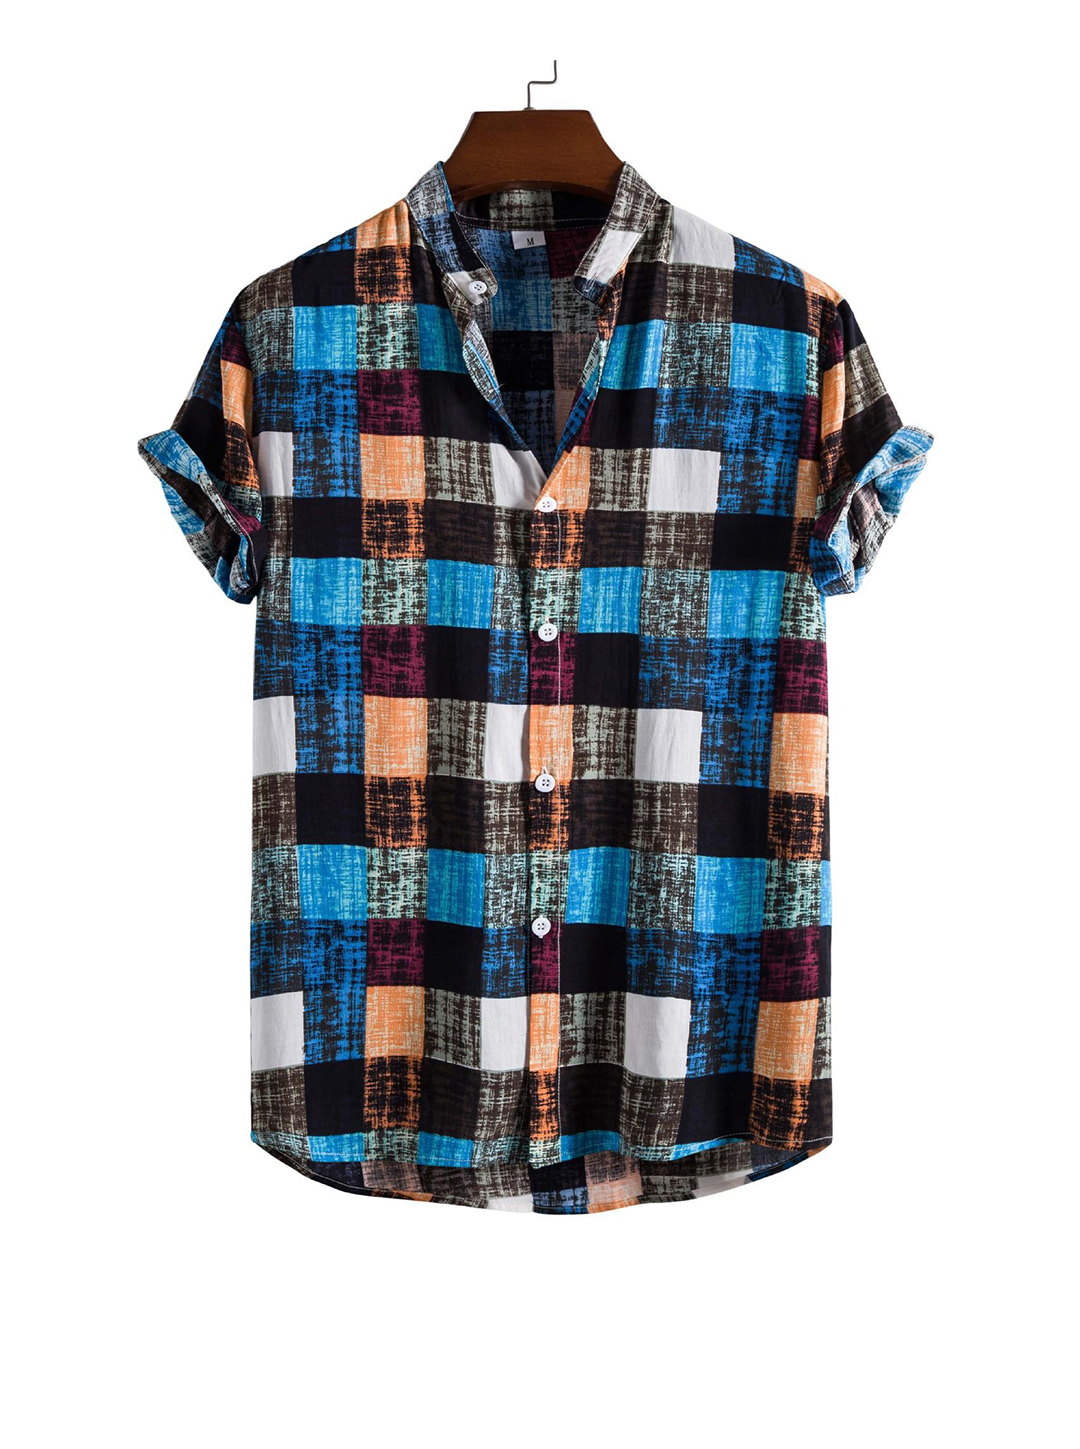 Men's Colorful Check Print Faux Linen Casual Short Sleeve Shirts-poisonstreetwear.com